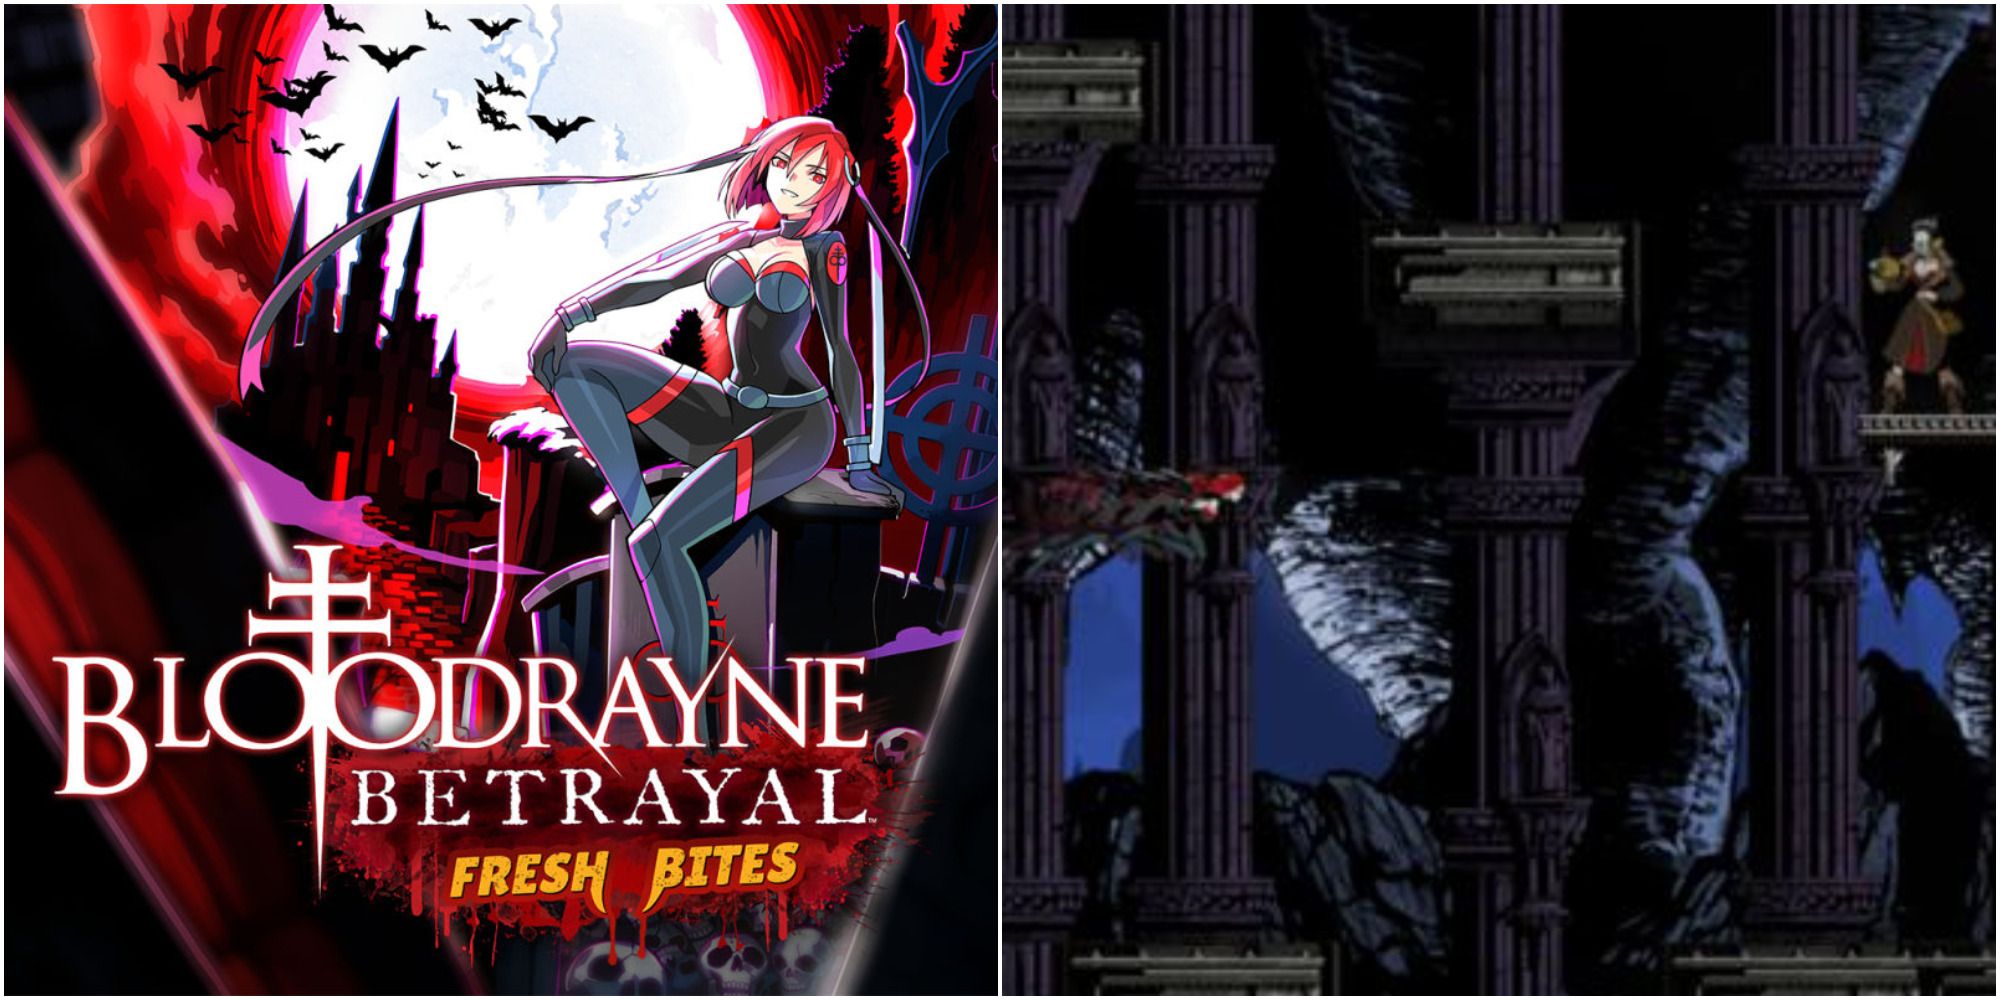 bloodrayne betrayal cover & gameplay